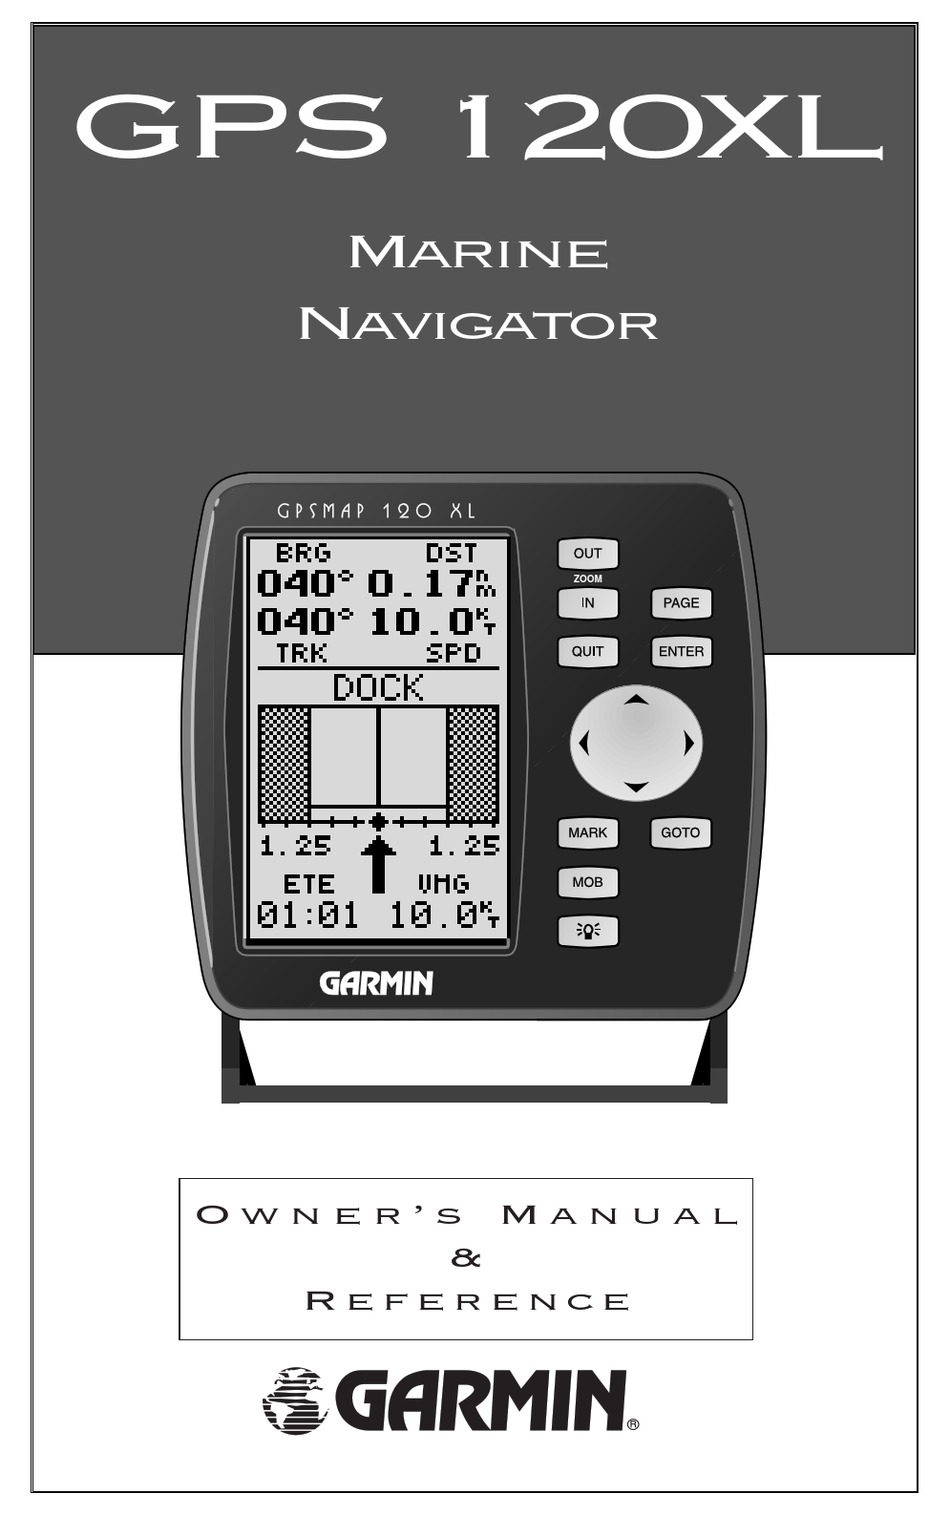 GARMIN GPS OWNER'S MANUAL Pdf Download ManualsLib